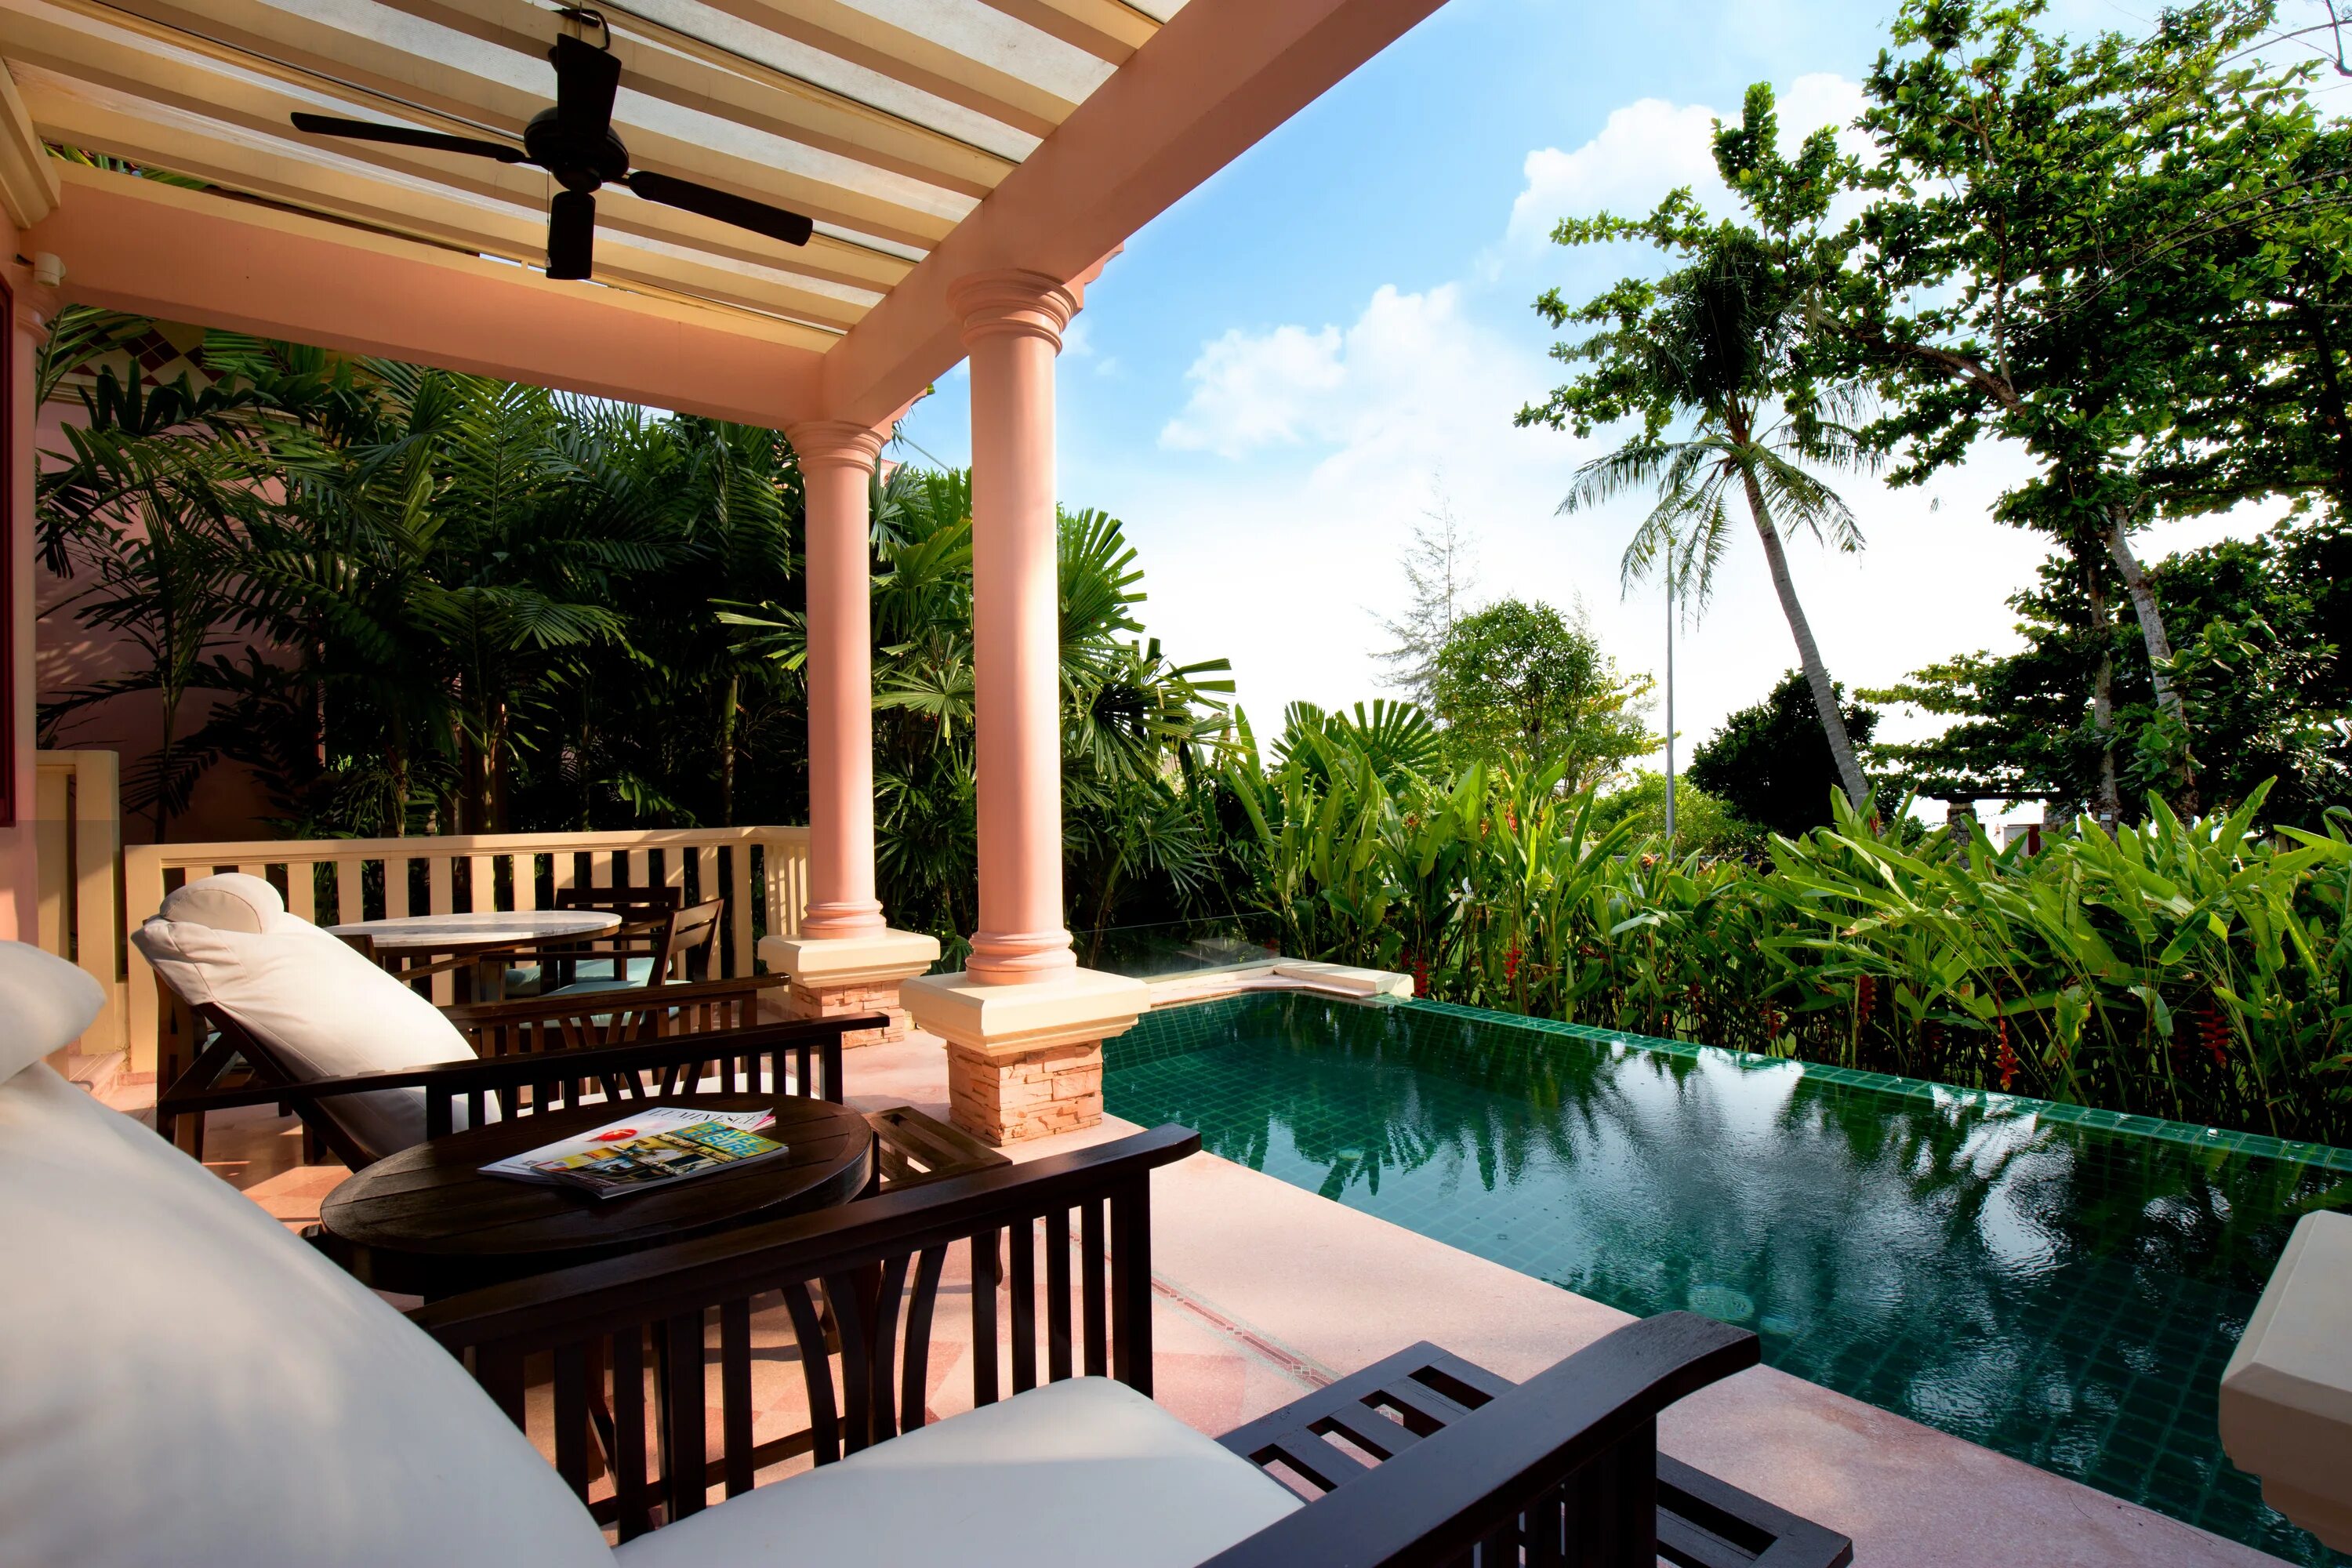 Bedroom pool. Centara Grand Beach Resort Phuket. Центара Гранд Пхукет Карон. Центара Гранд Бич Пхукет 5. Центара Тайланд Пхукет.